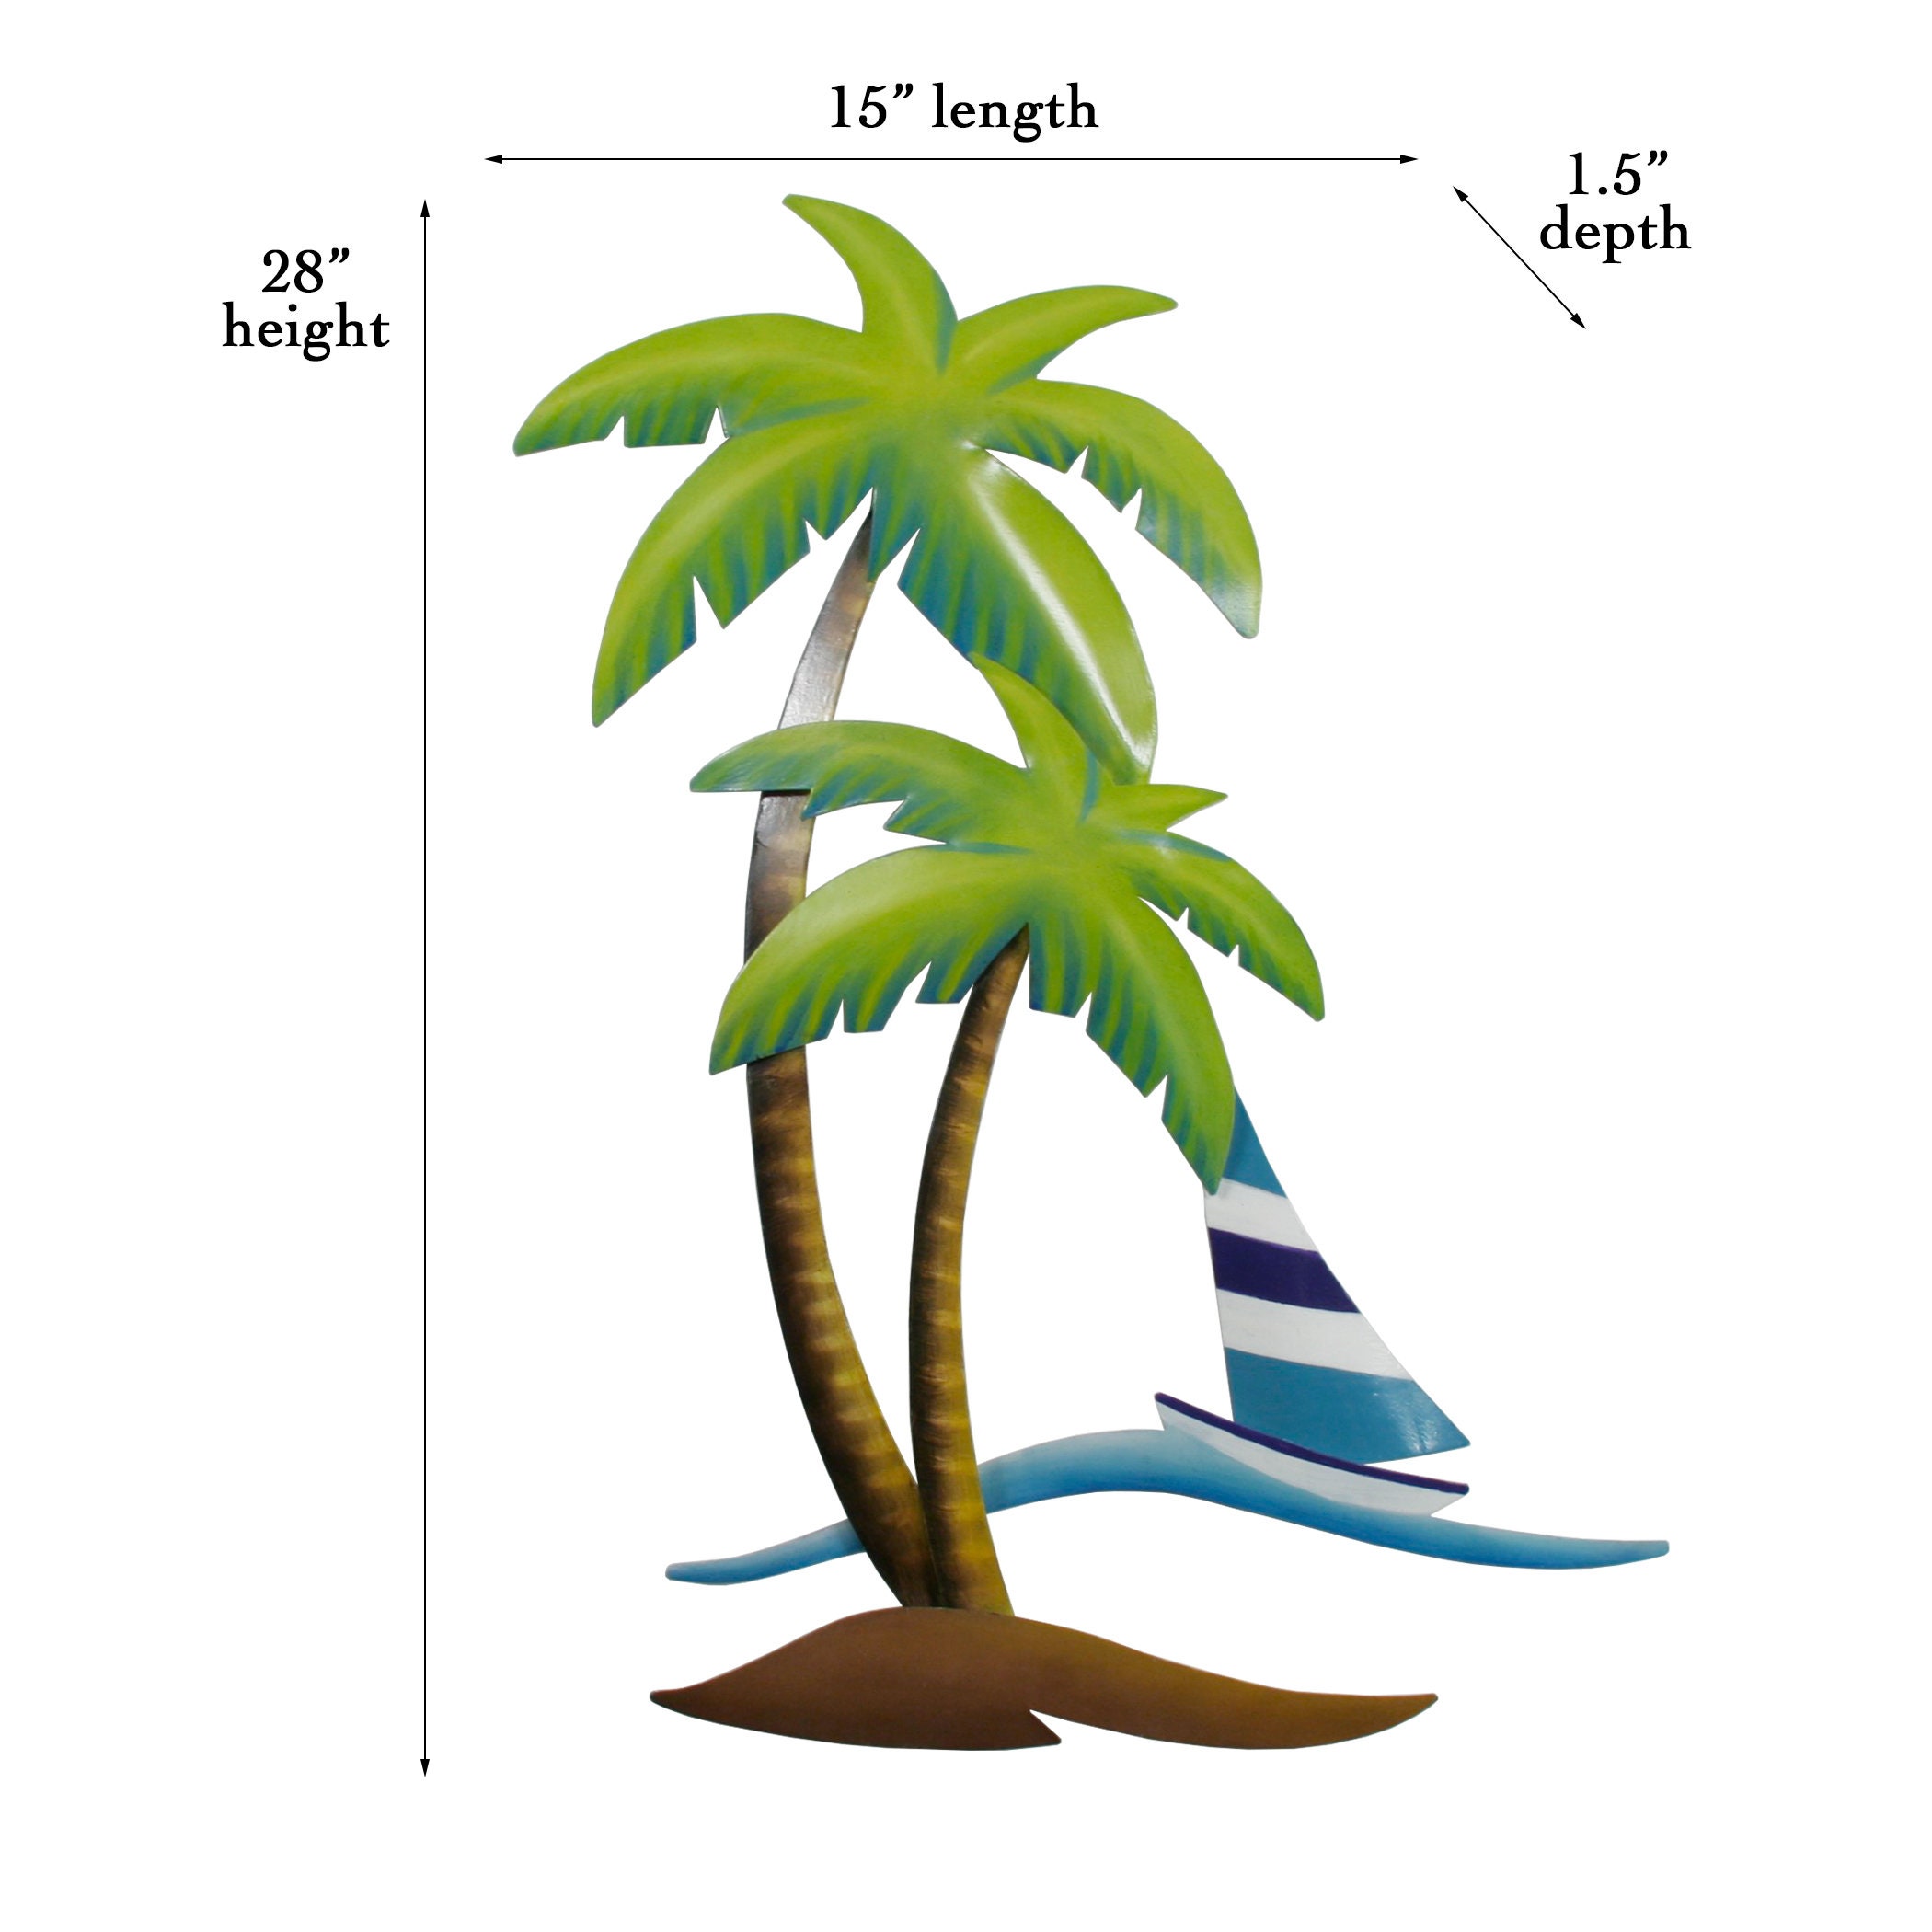 790+ Palm Tree Transparent Background Stock Illustrations, Royalty